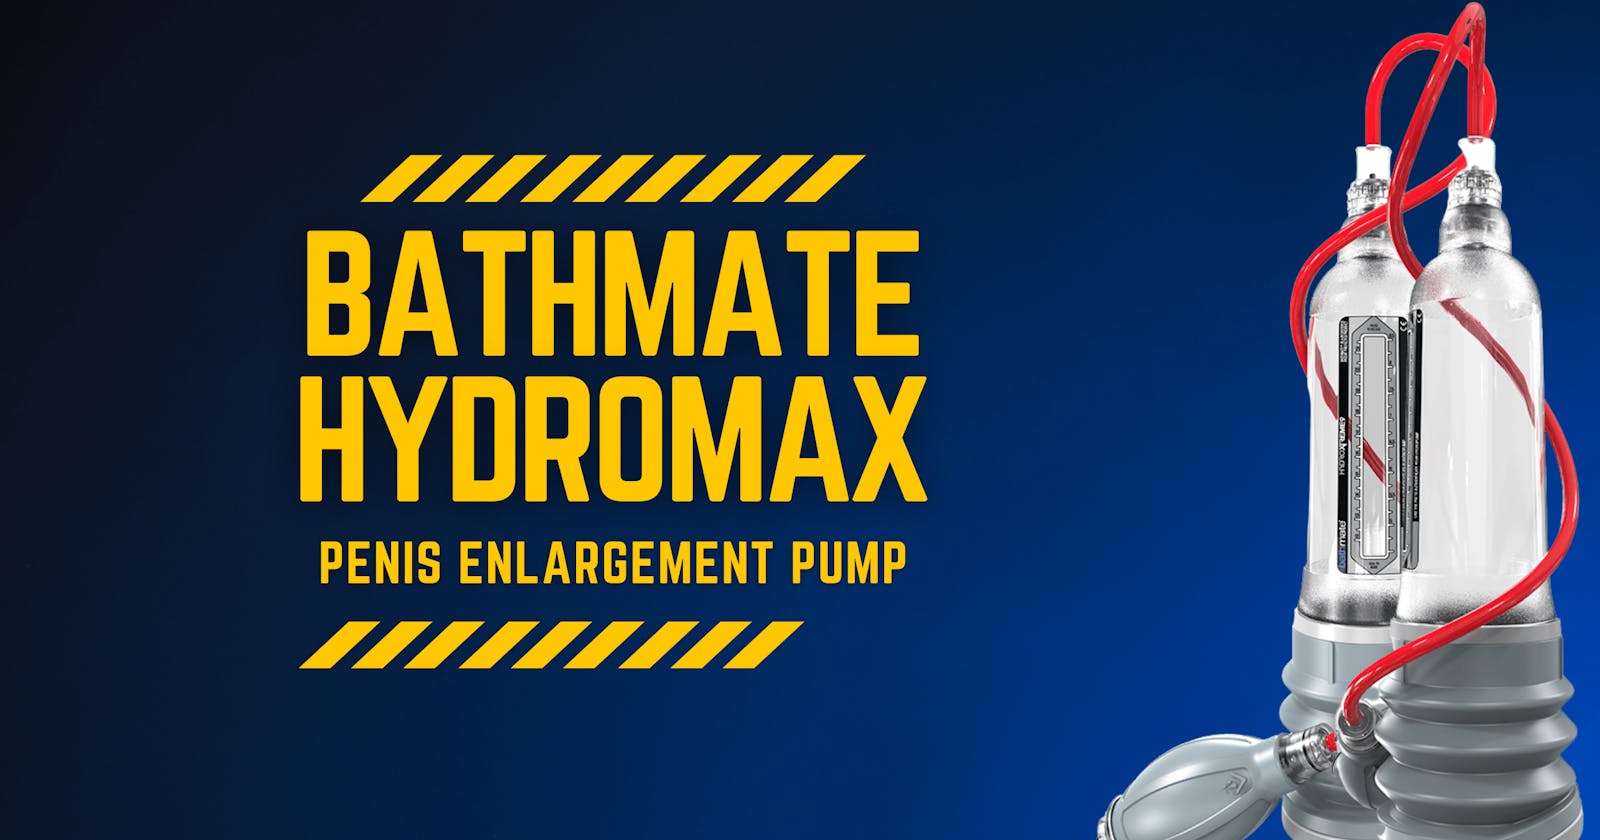 Bathmate Hydromax reduce the problem of premature ejaculation